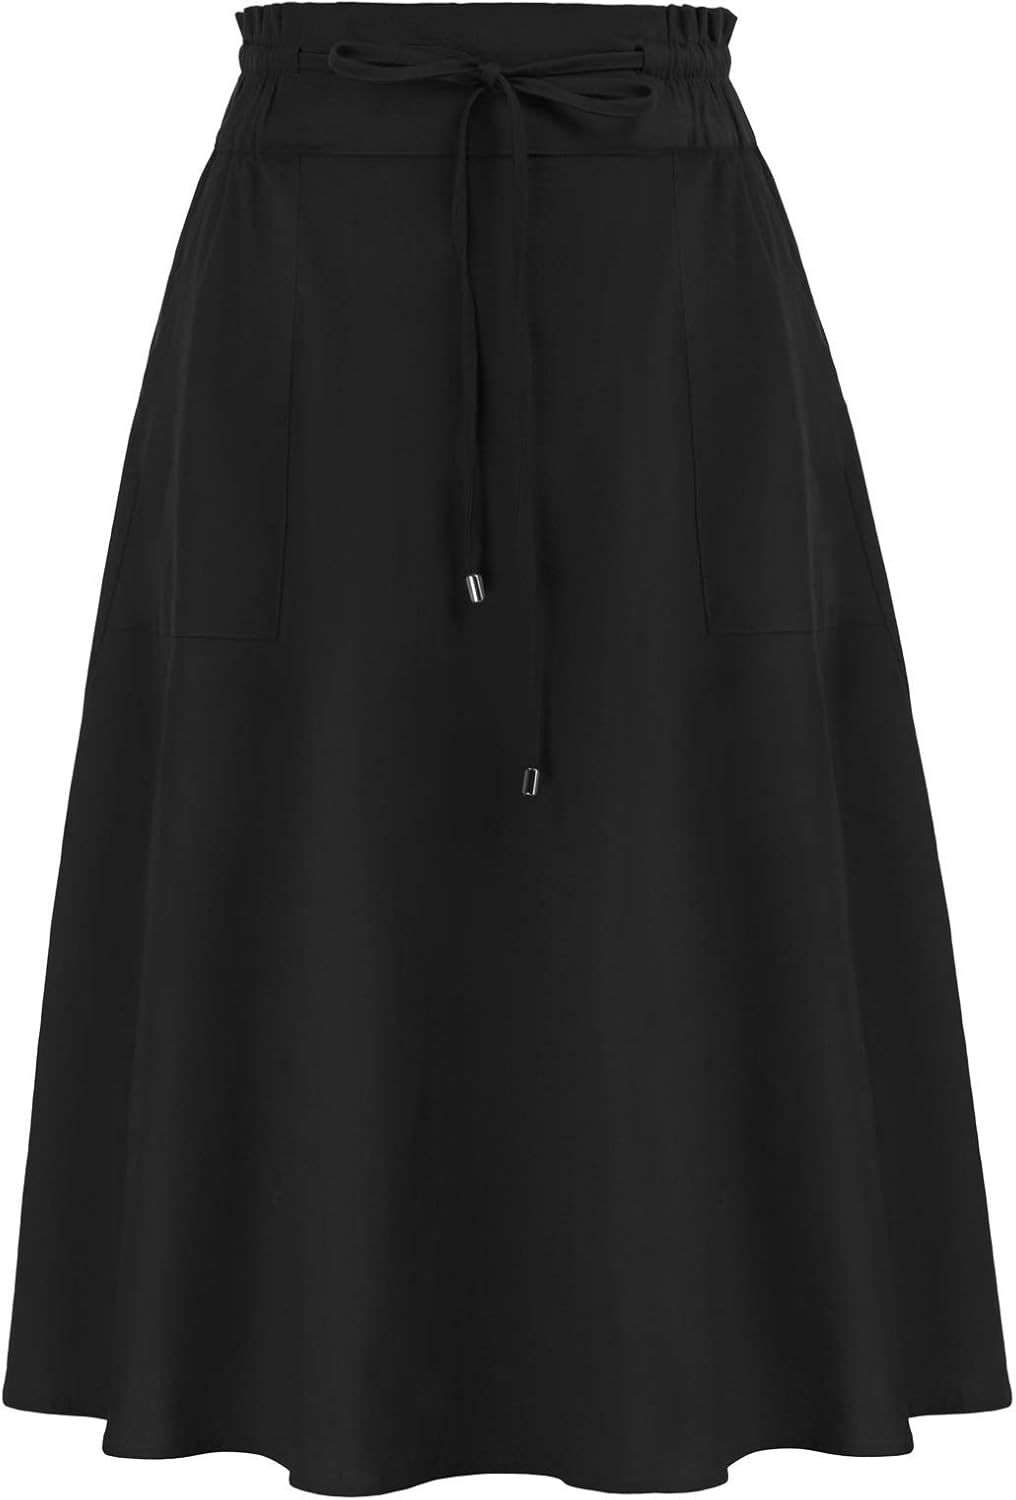 KANCY KOLE Women Casual Cotton Linen Skirts Frill Tie Waist A-Line Midi Skirt with Pockets S-XXL | Amazon (US)